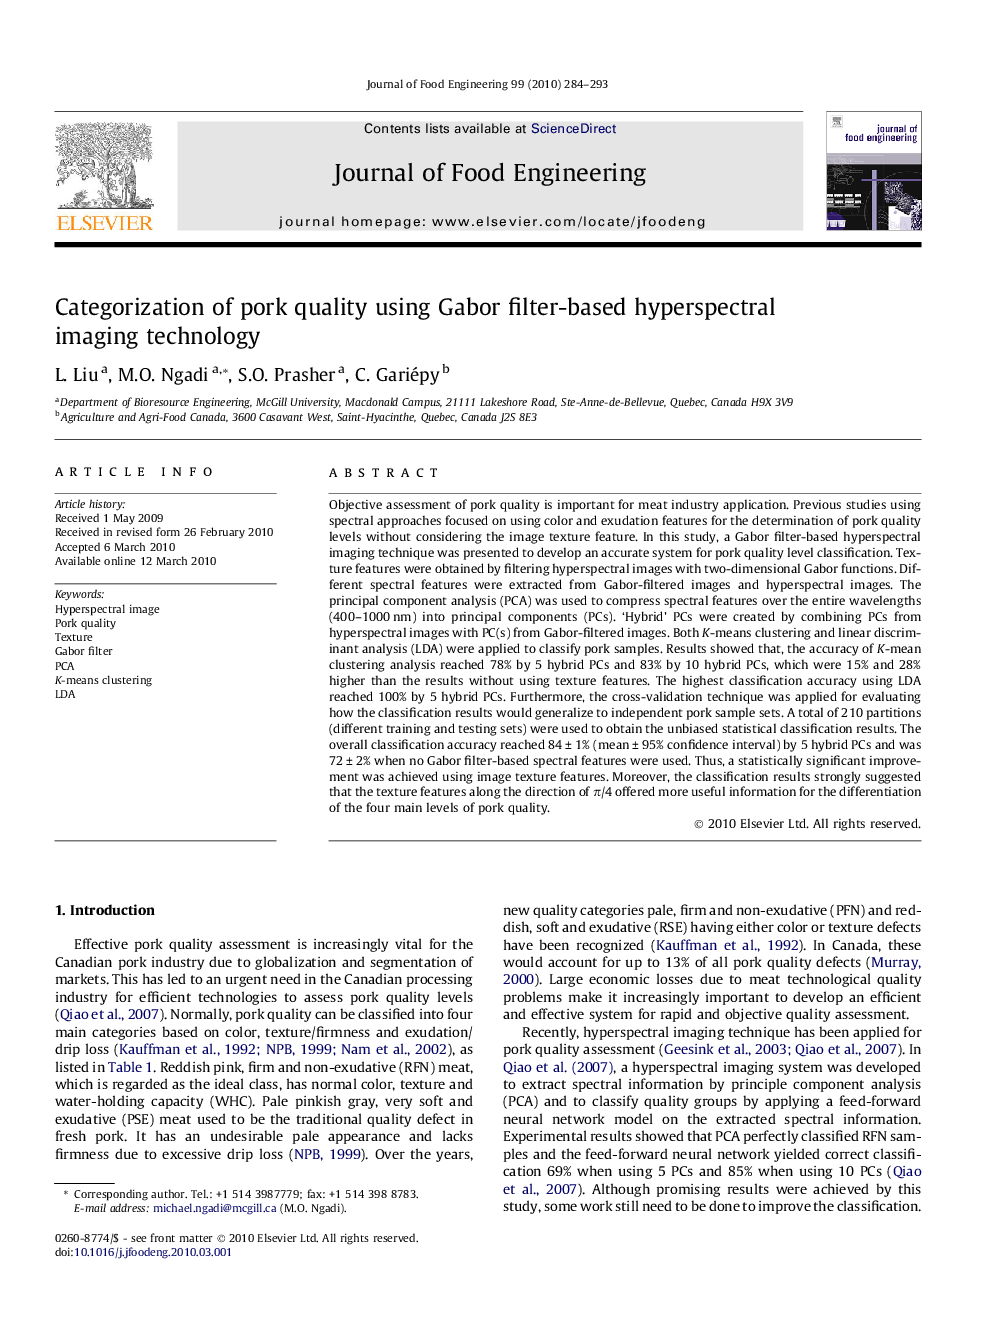 Categorization of pork quality using Gabor filter-based hyperspectral imaging technology